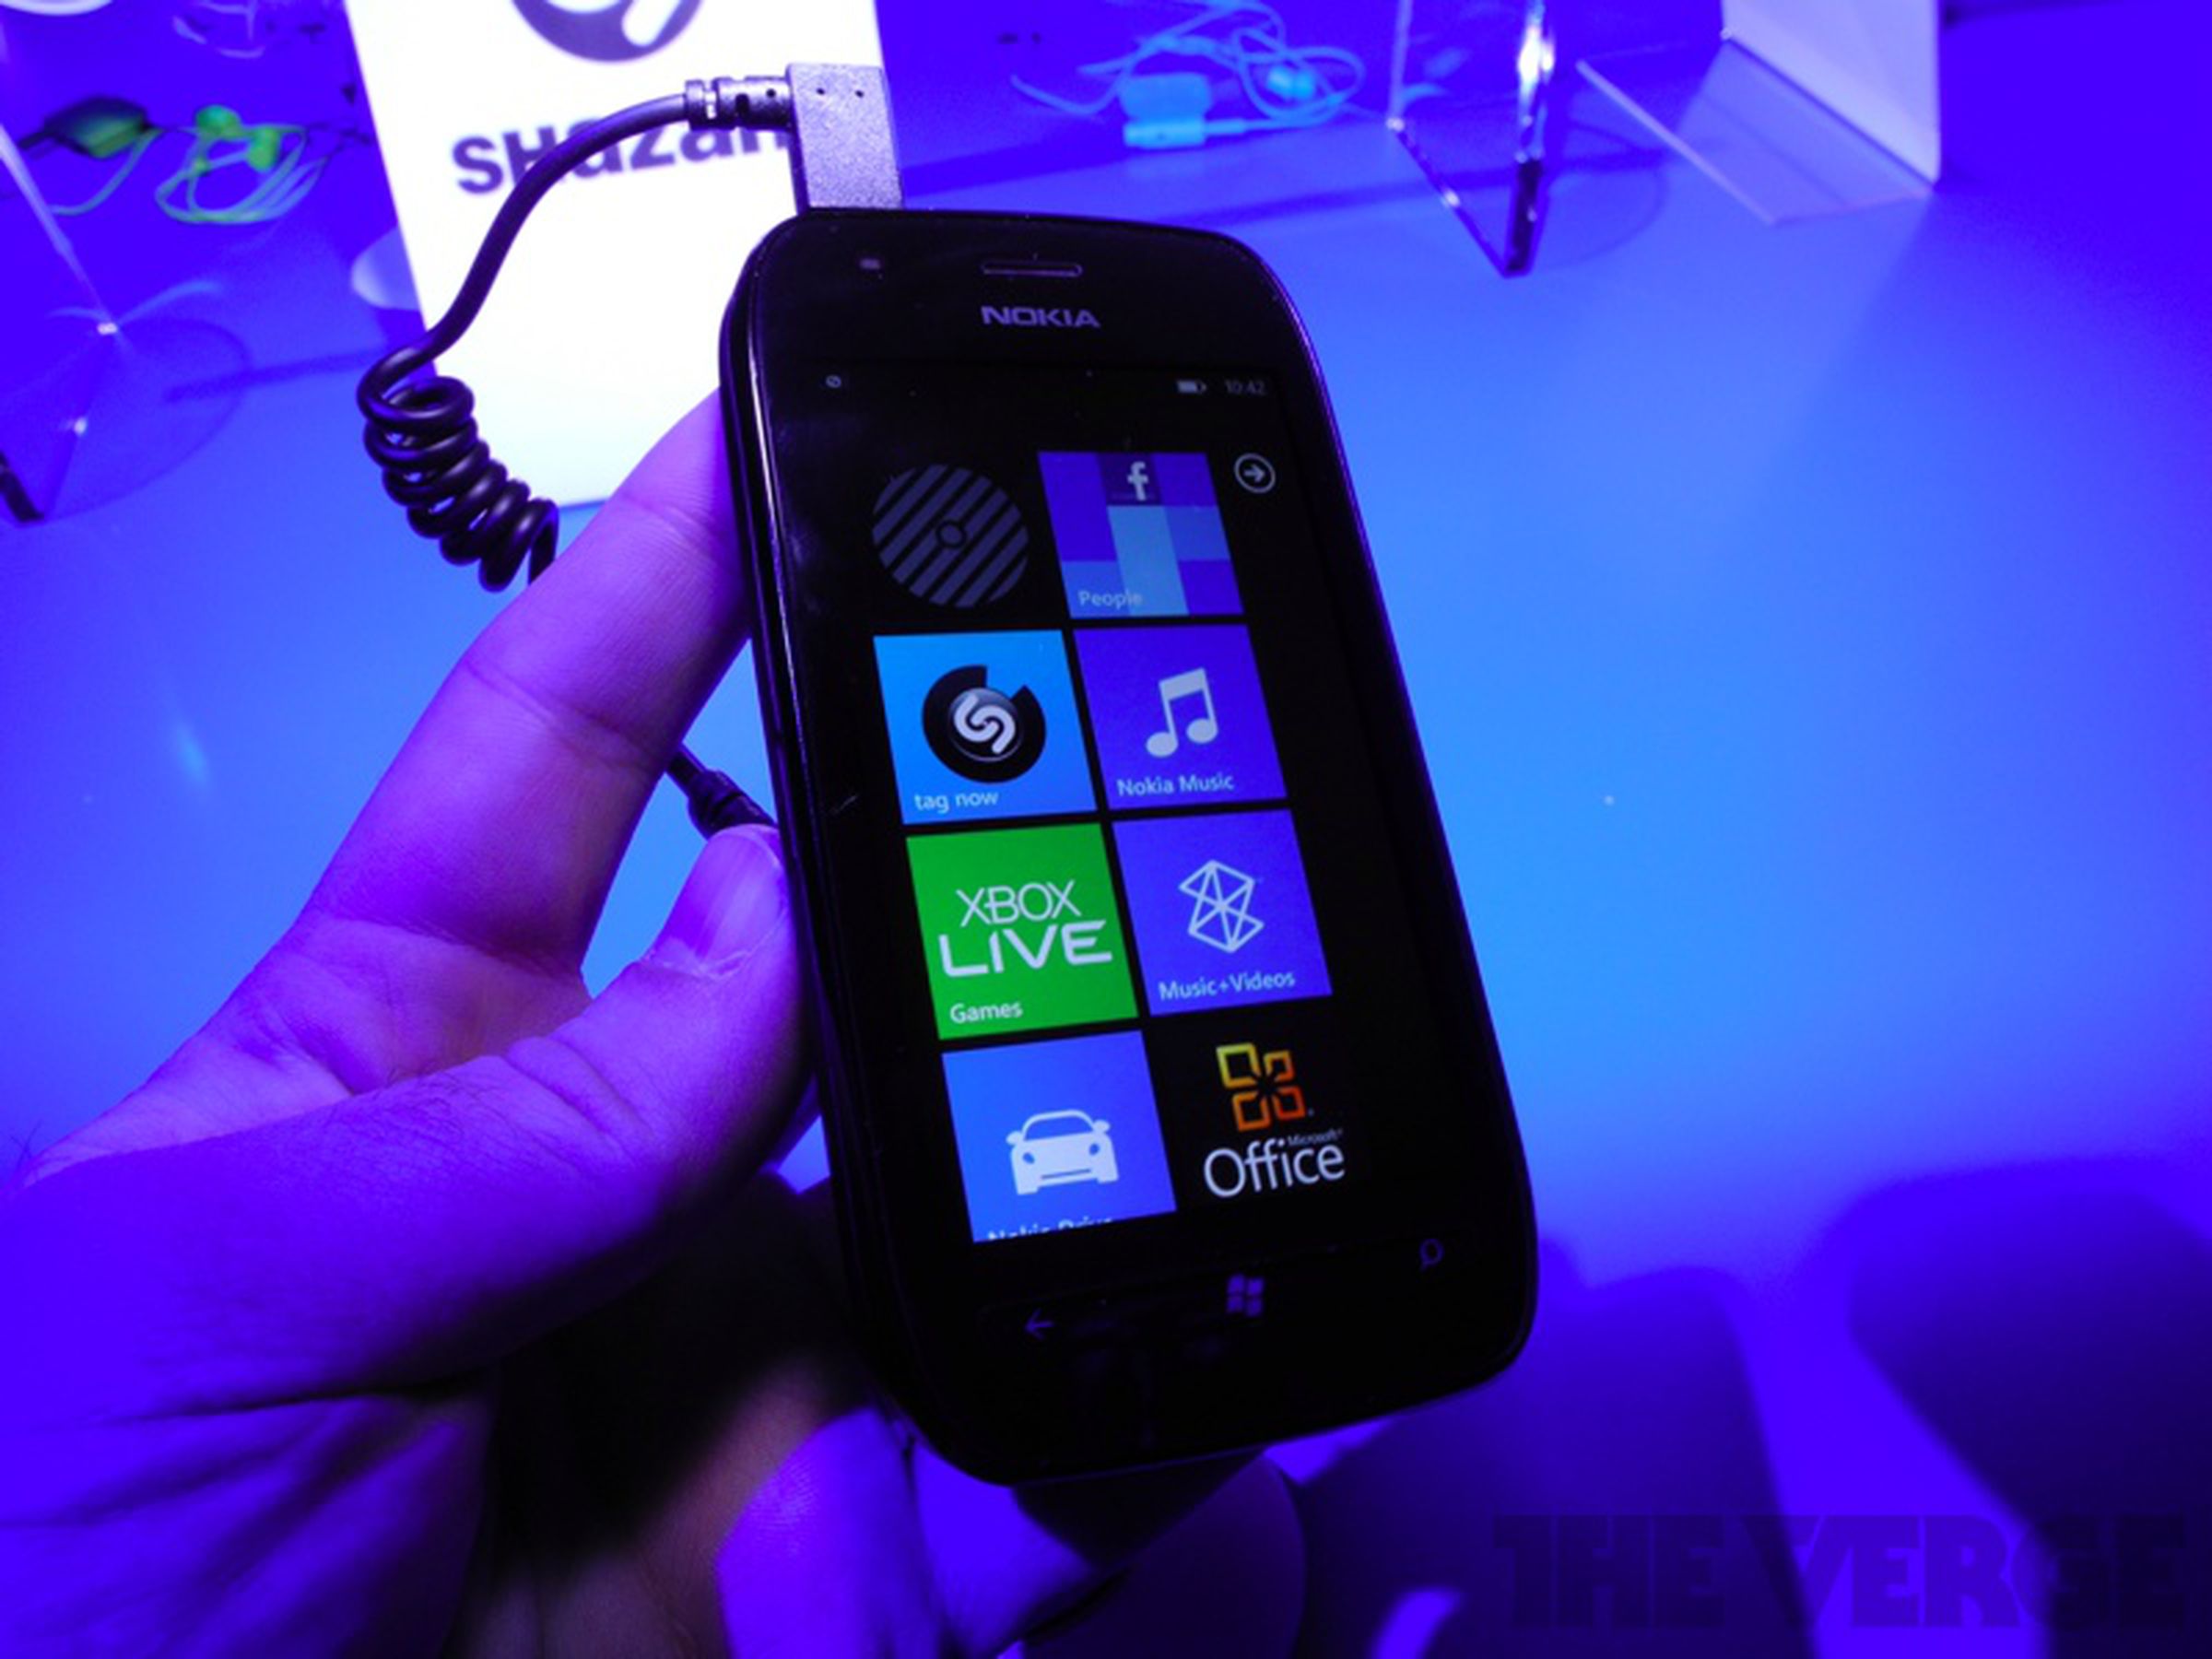 Nokia Lumia 710 Windows Phone Hands on Photos